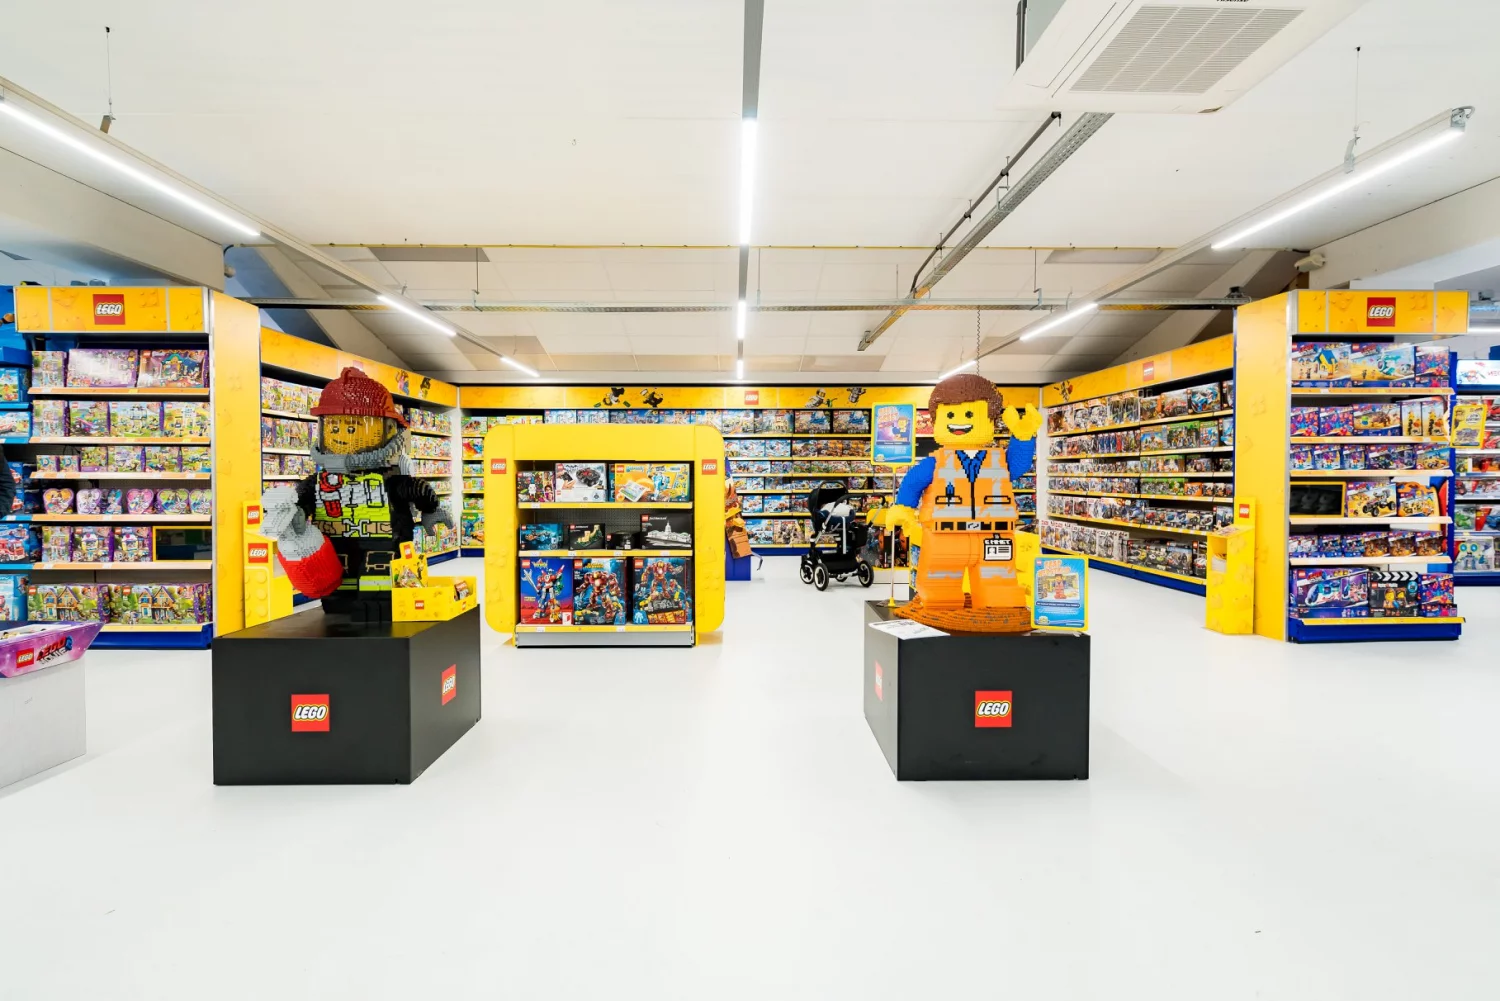 Lego shop-in-shop